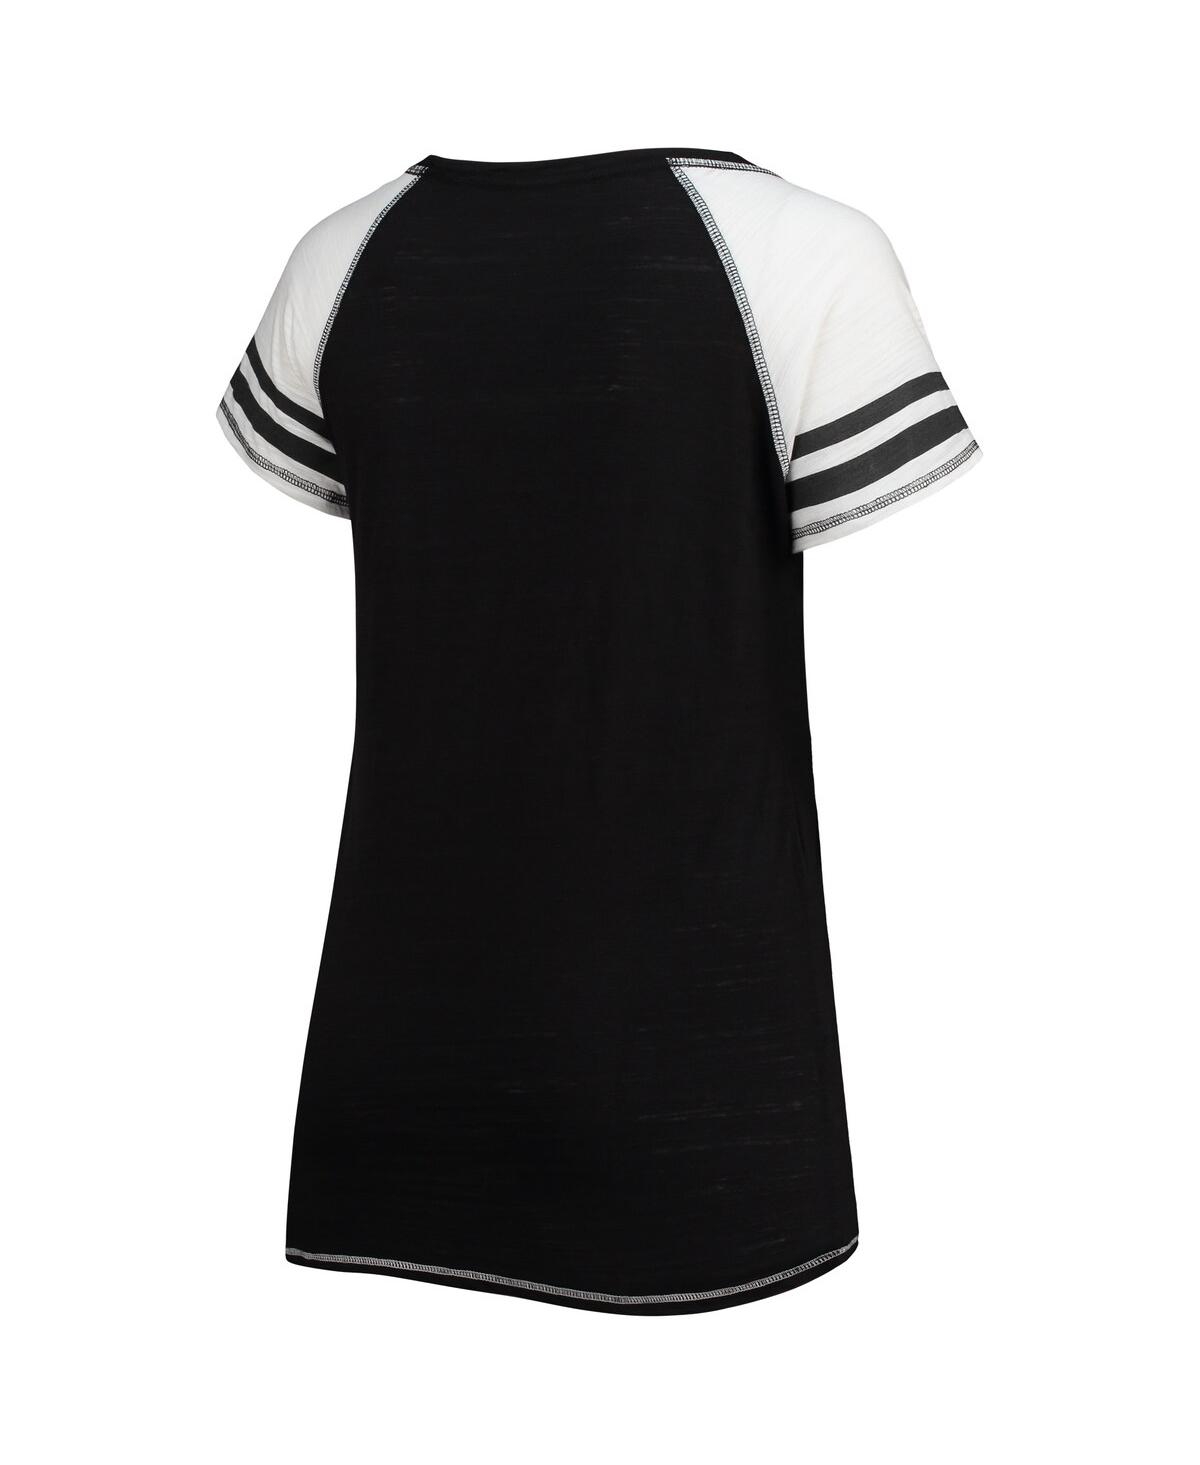 Shop Soft As A Grape Women's  Black Miami Marlins Curvy Colorblock Tri-blend Raglan V-neck T-shirt